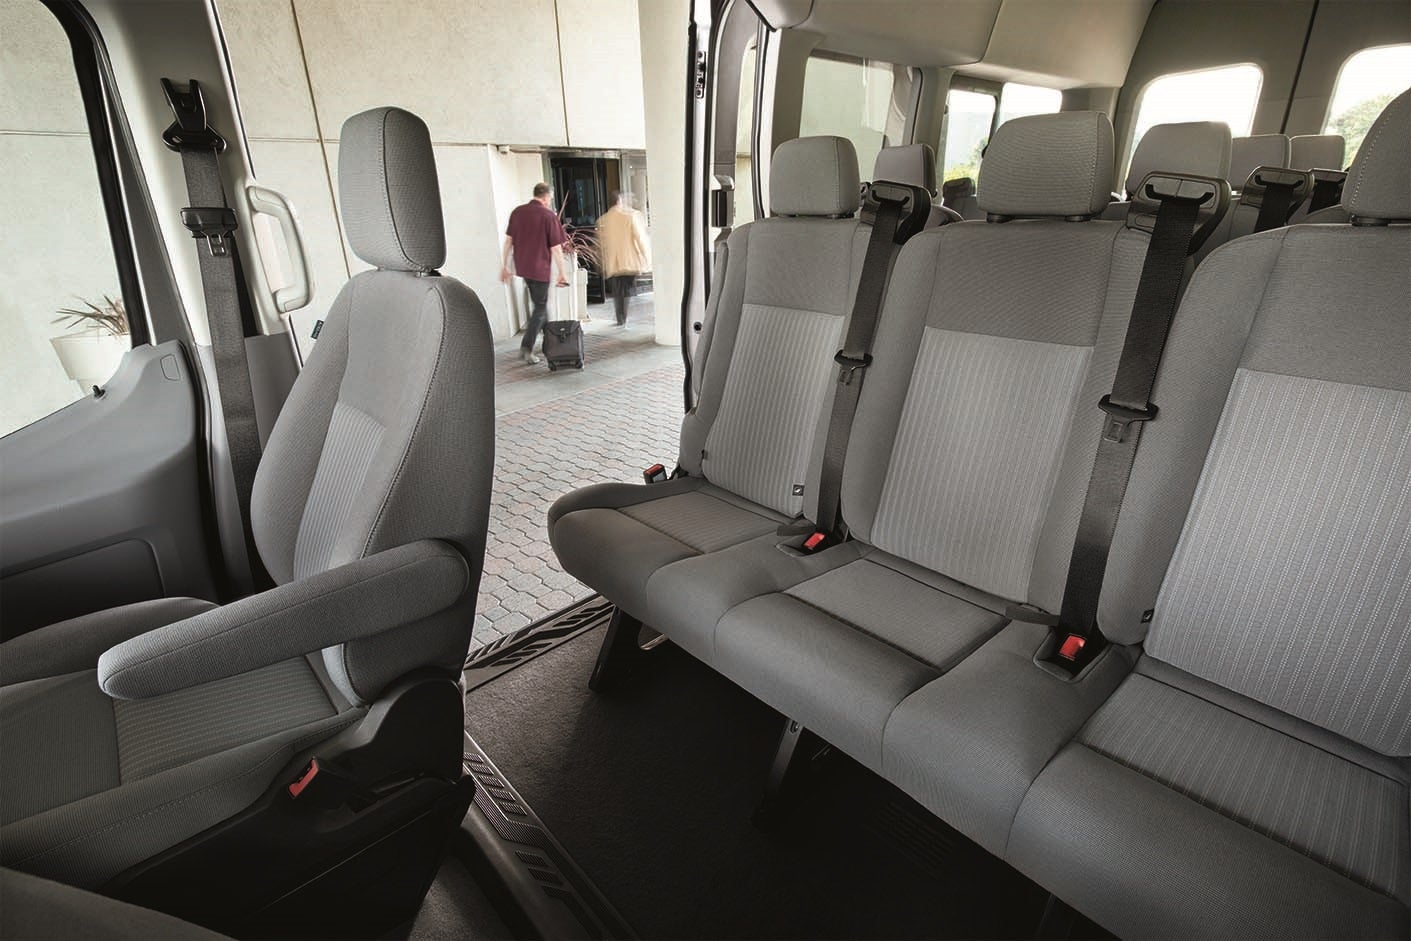 2019 Ford Transit interior